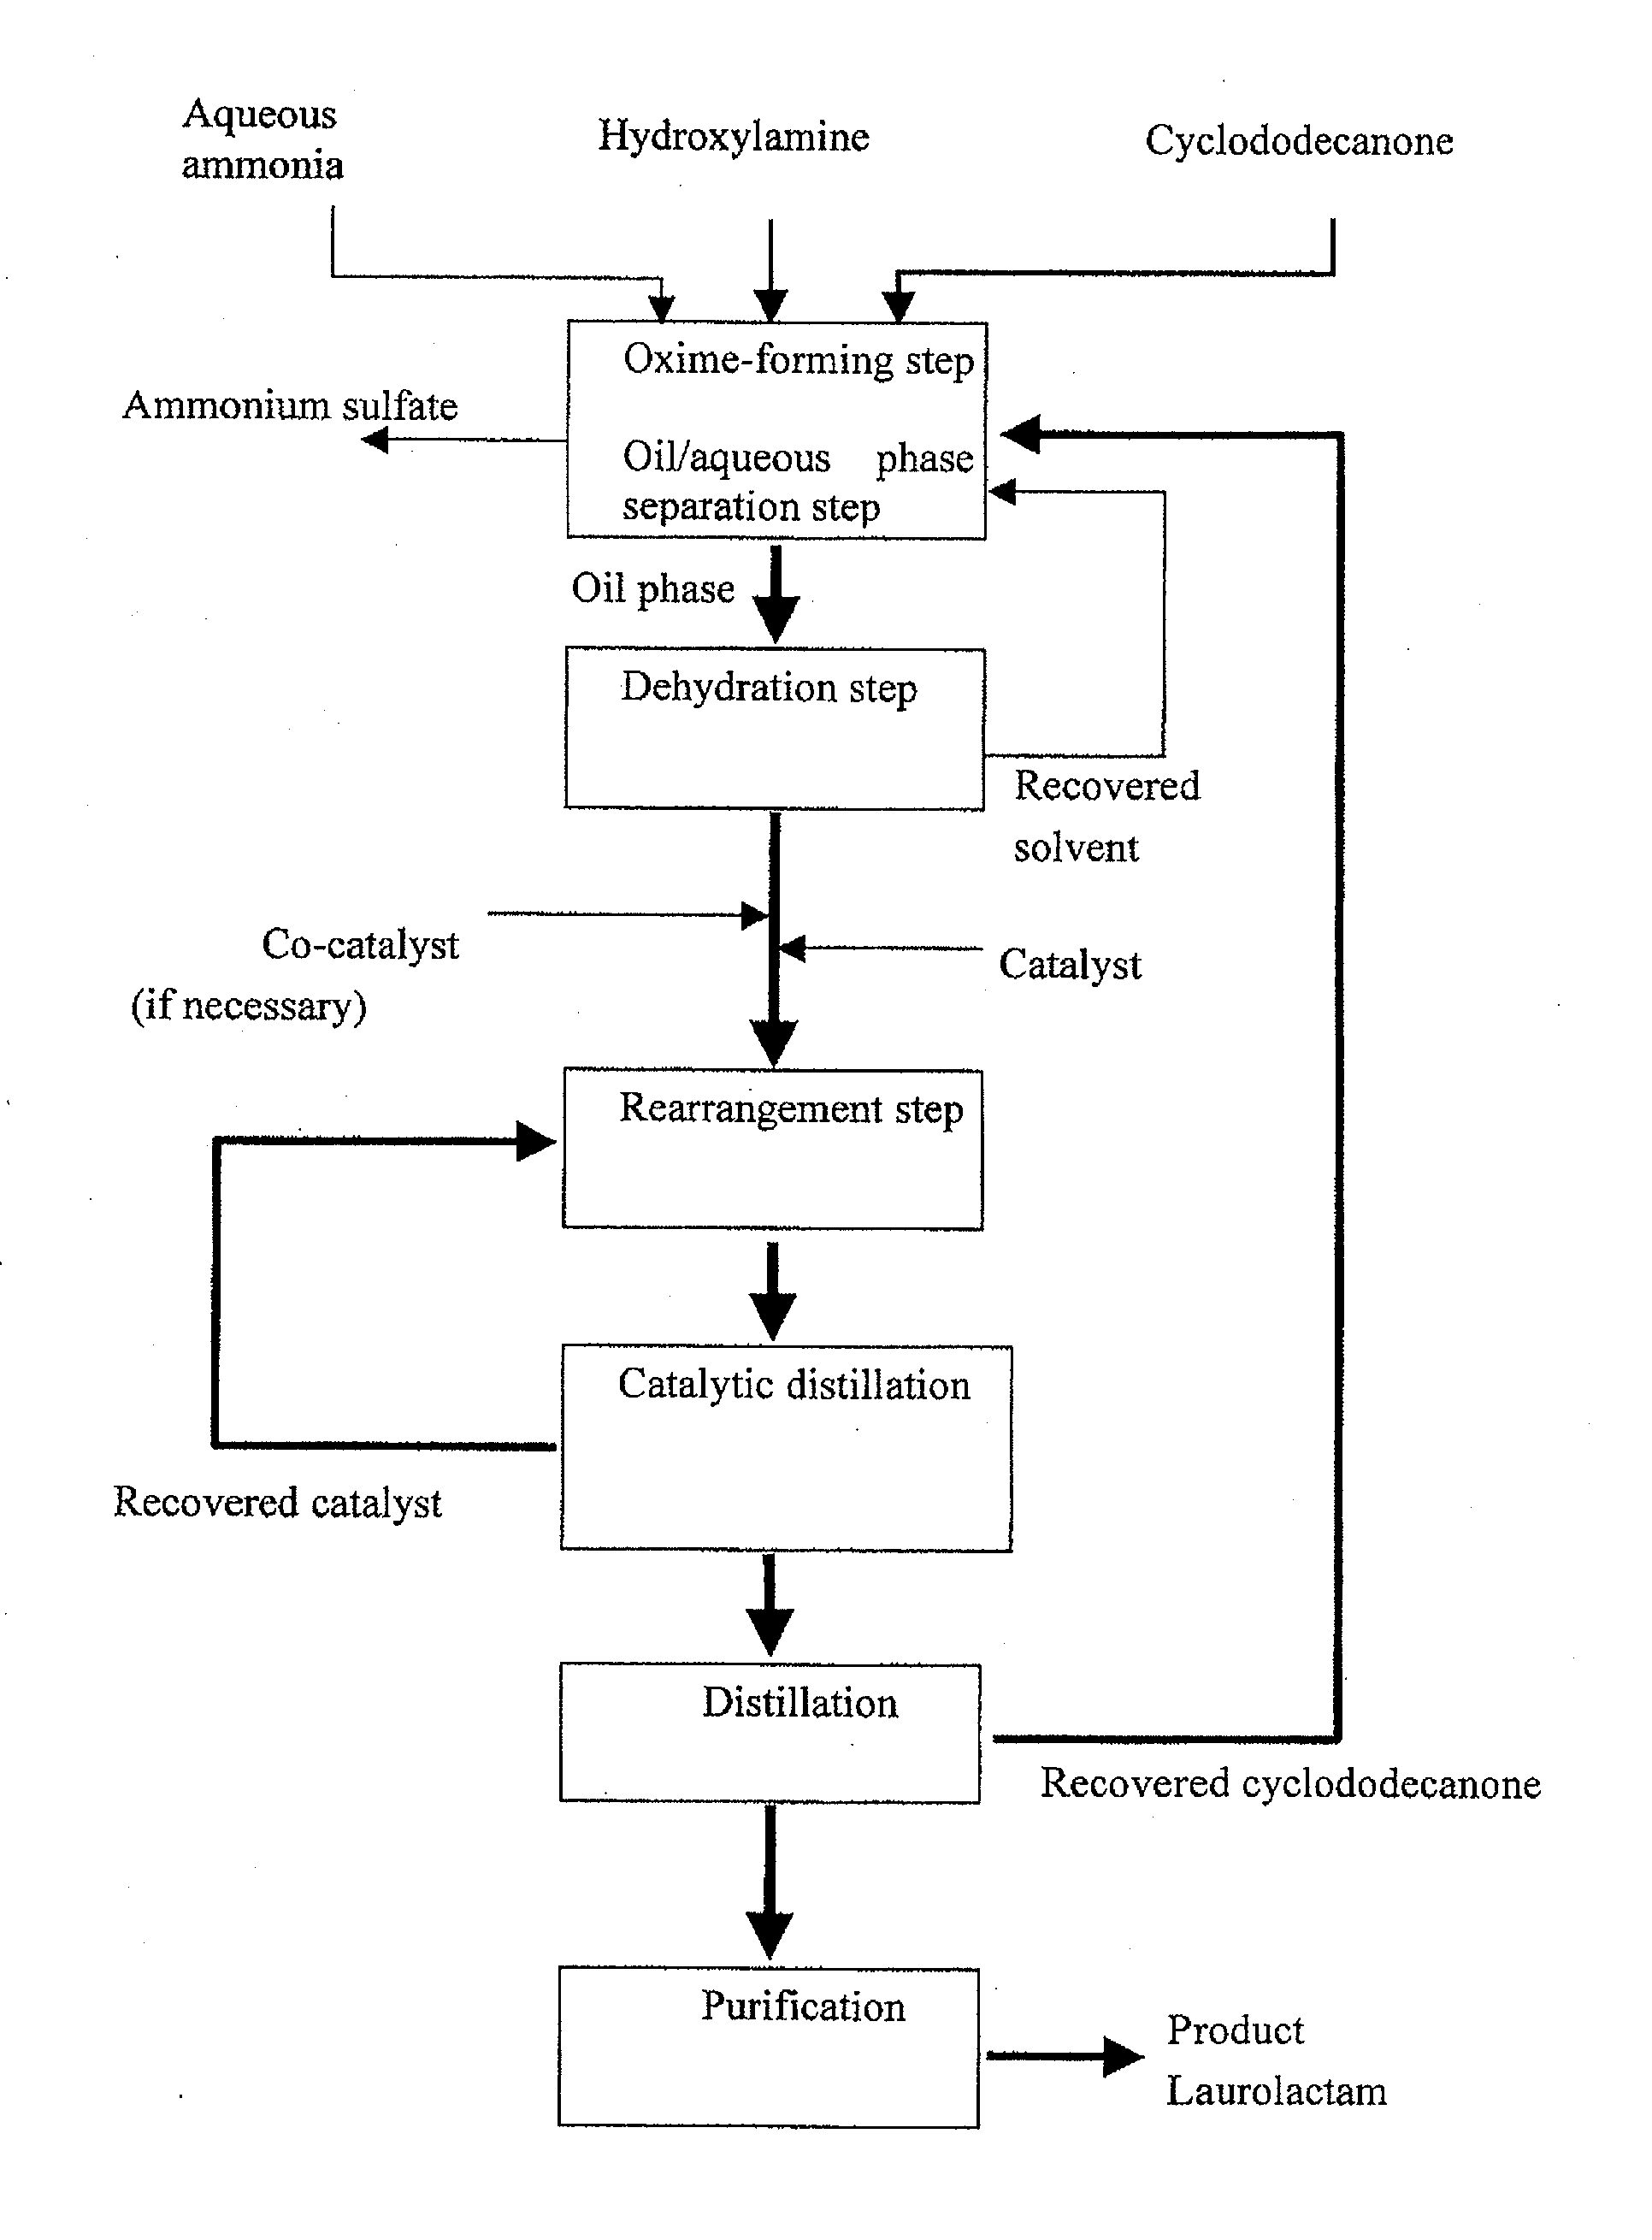 Process for producing laurolactam